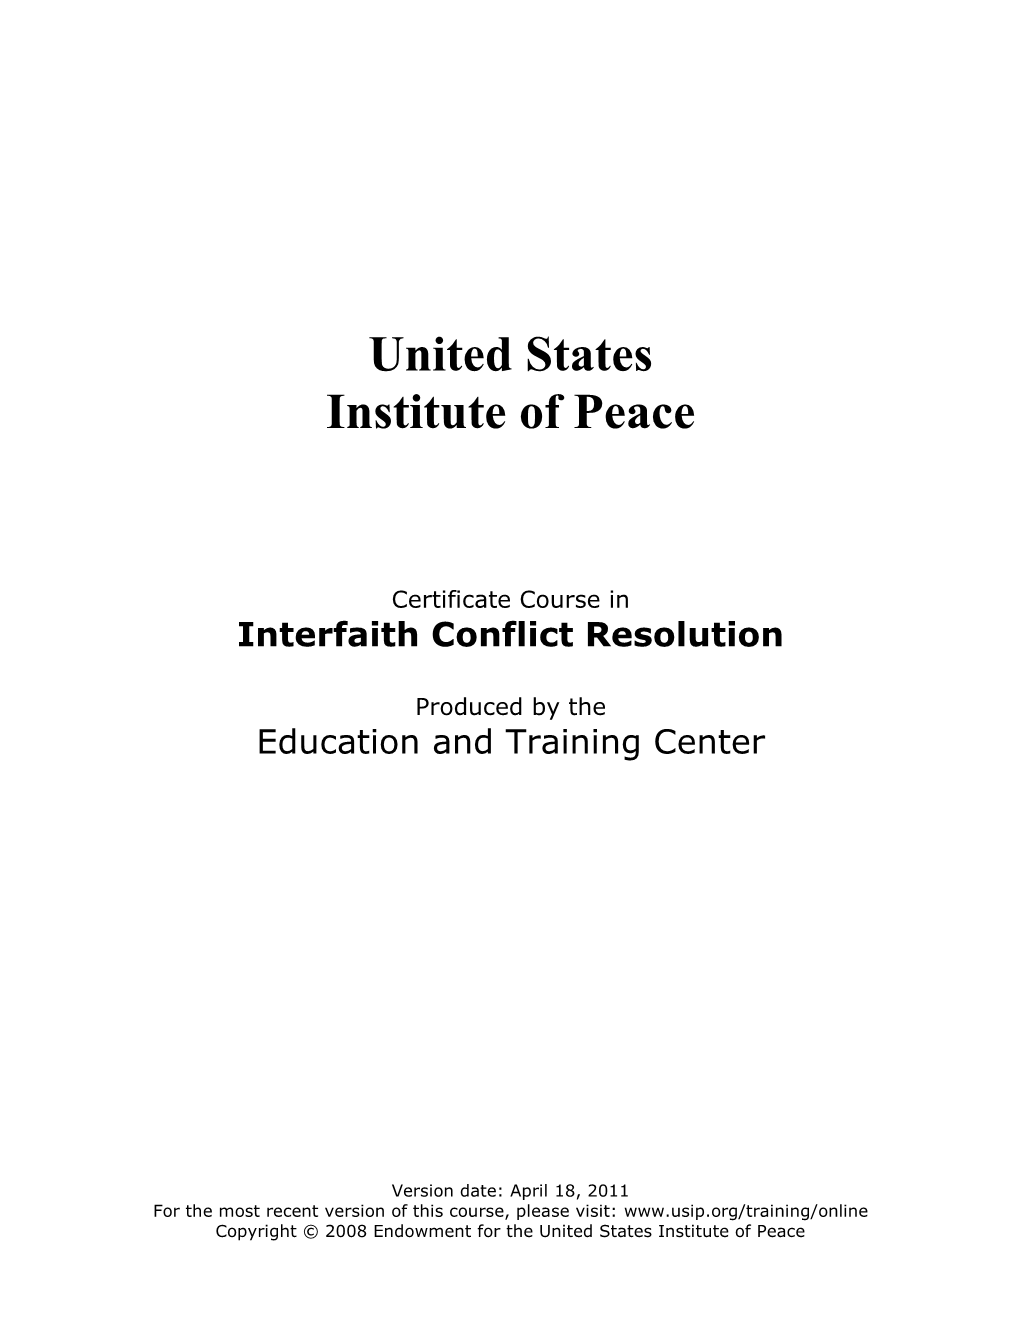 Interfaith Conflict Resolution